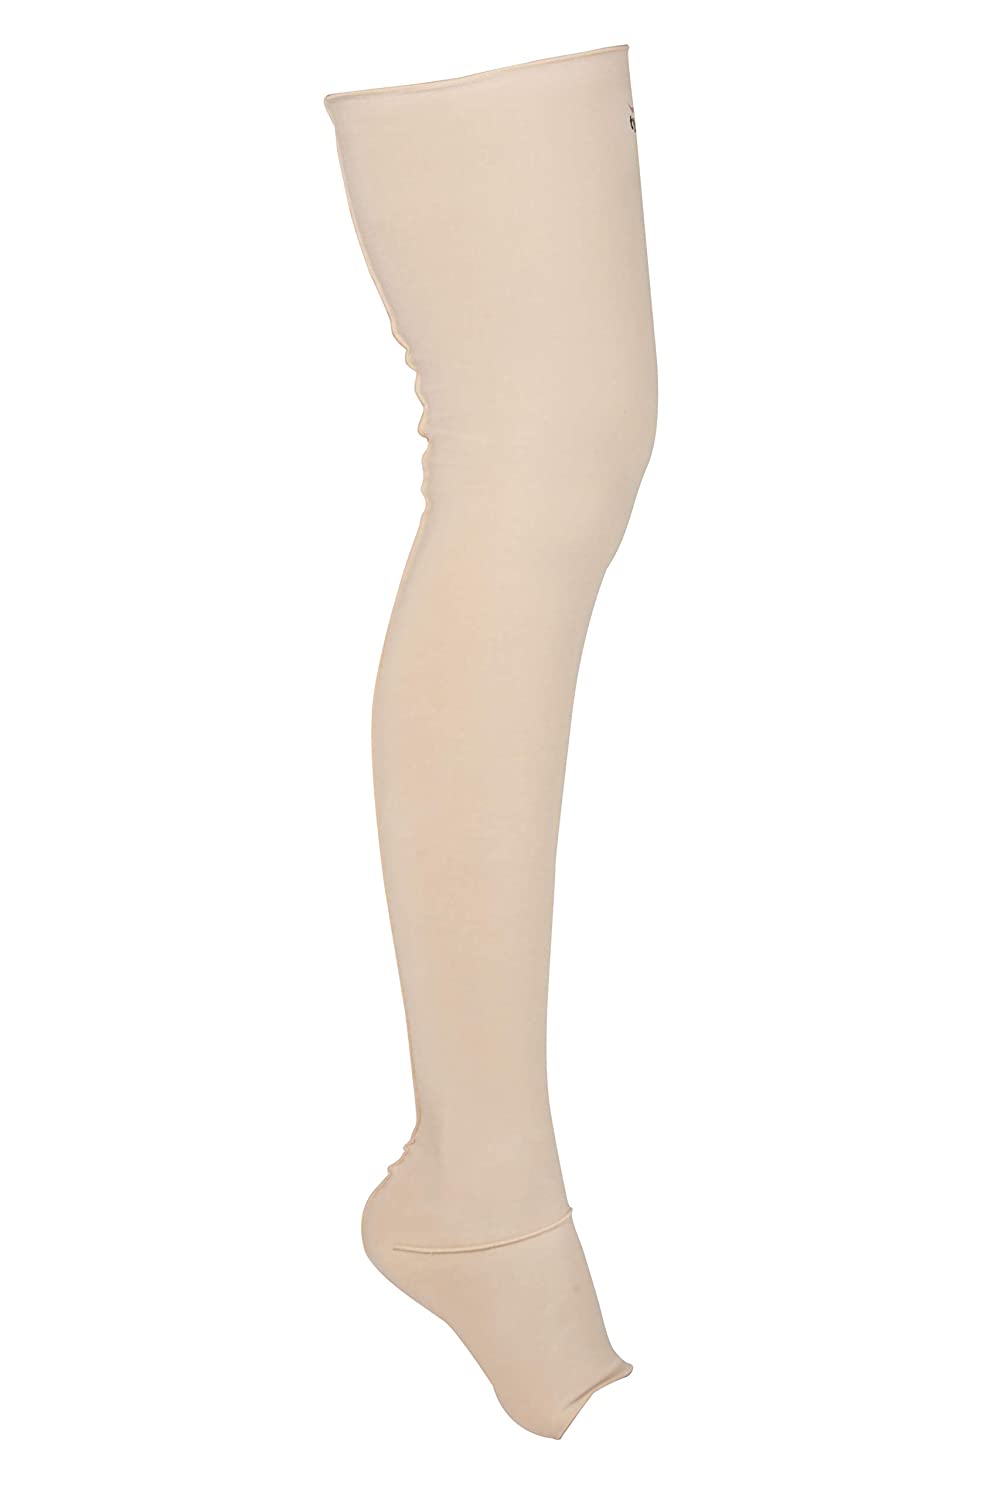 Tynor I -79 Compression Garment Leg Mid Thigh (Close Toe)- Pair